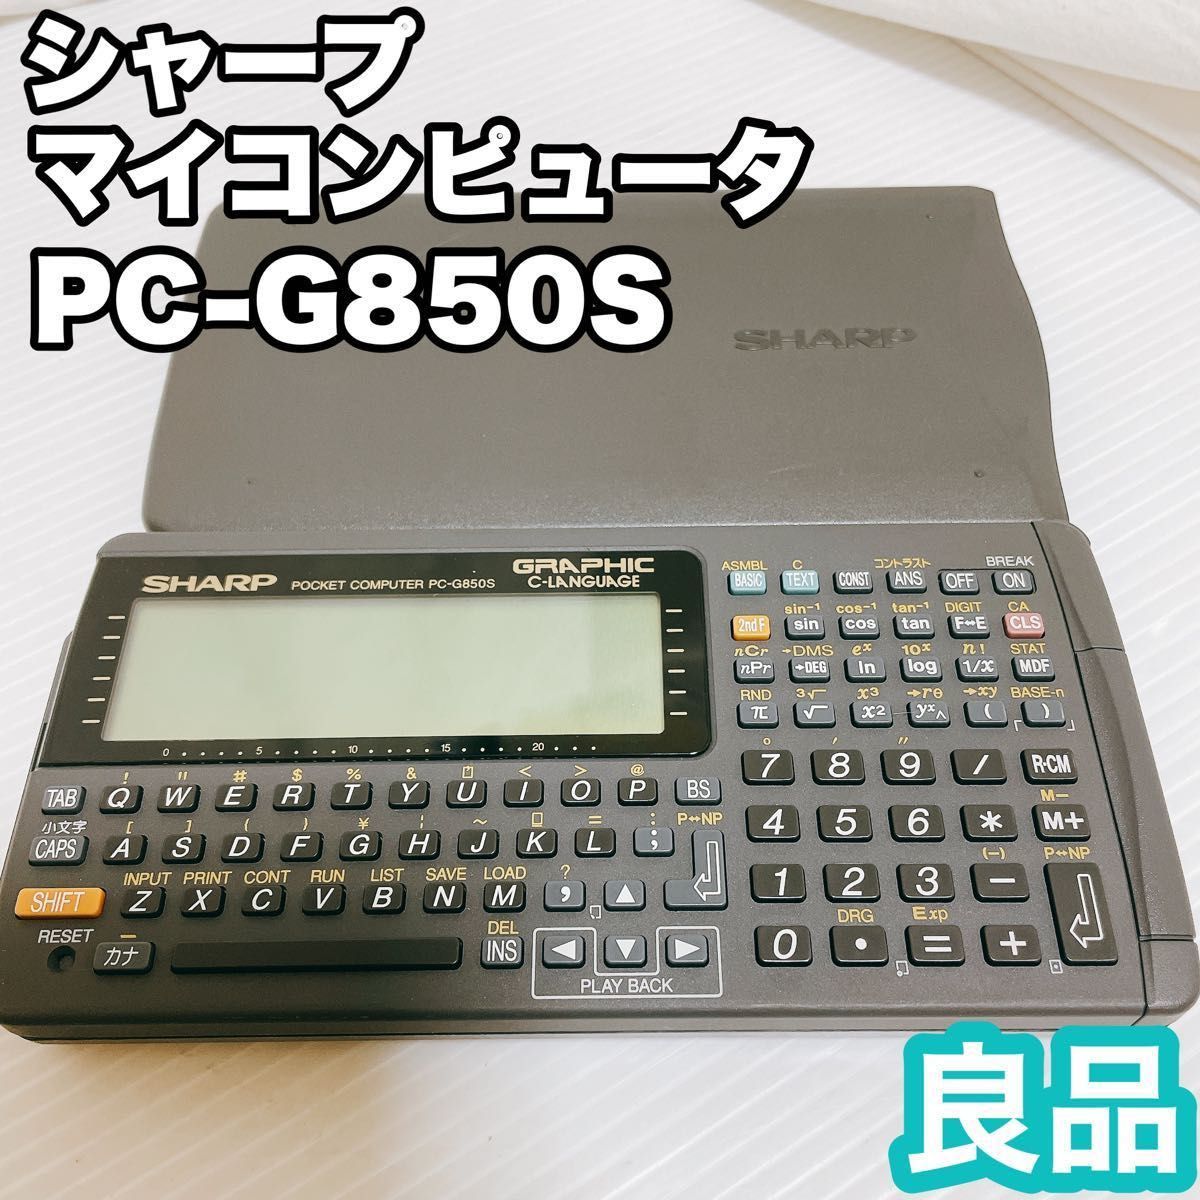 [ редкий ]SHARP sharp карманный компьютер PC-G850S карманный компьютер 